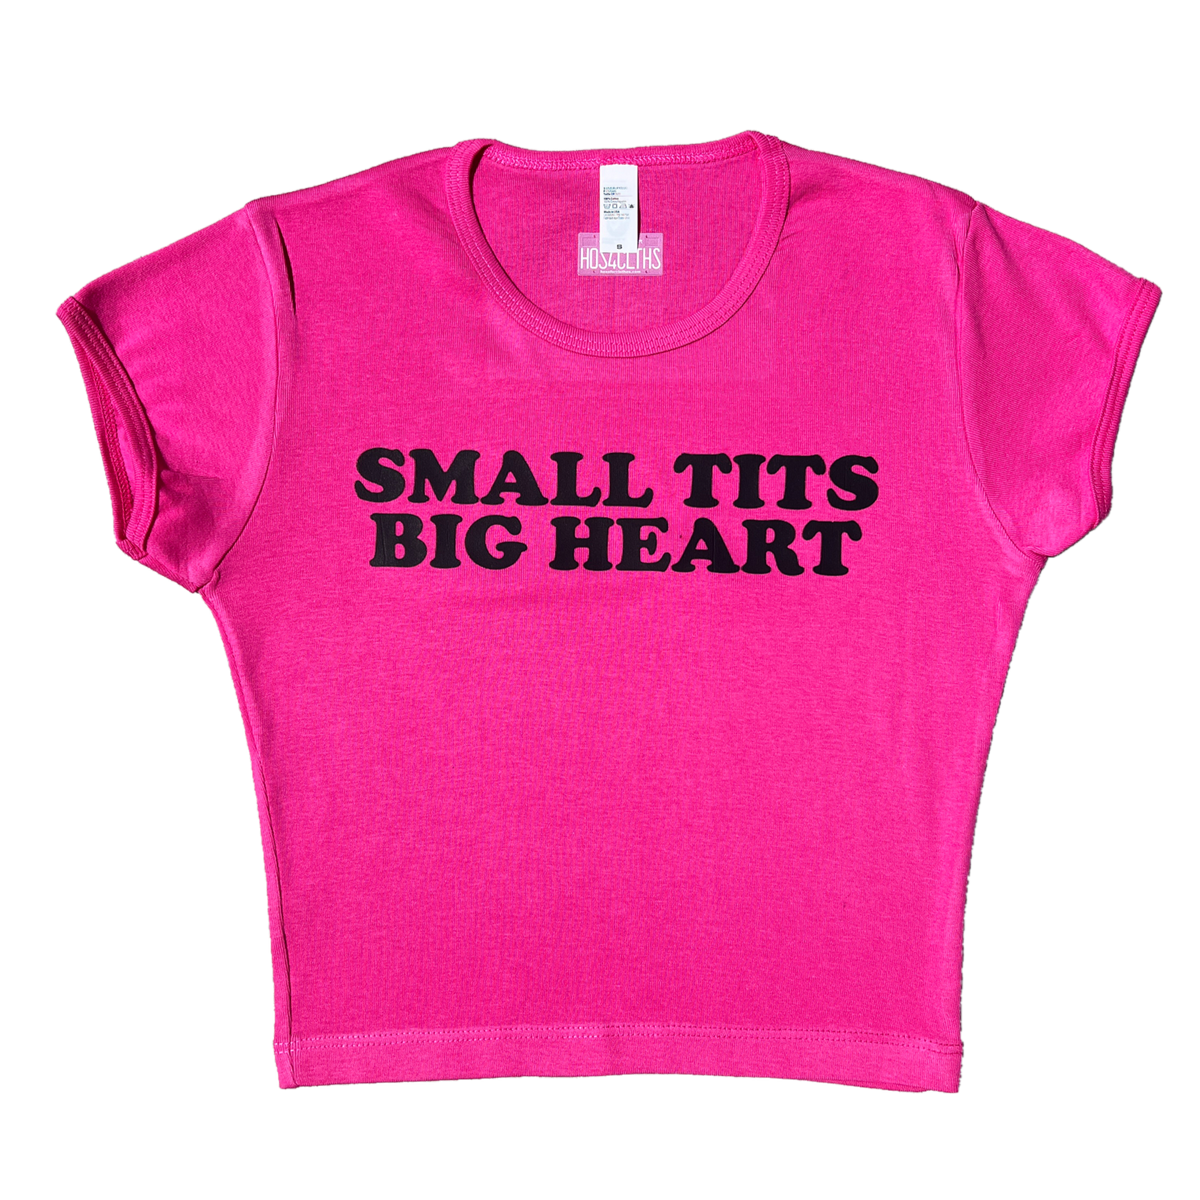 small boobs, big dreams baby tee: @shoperoda